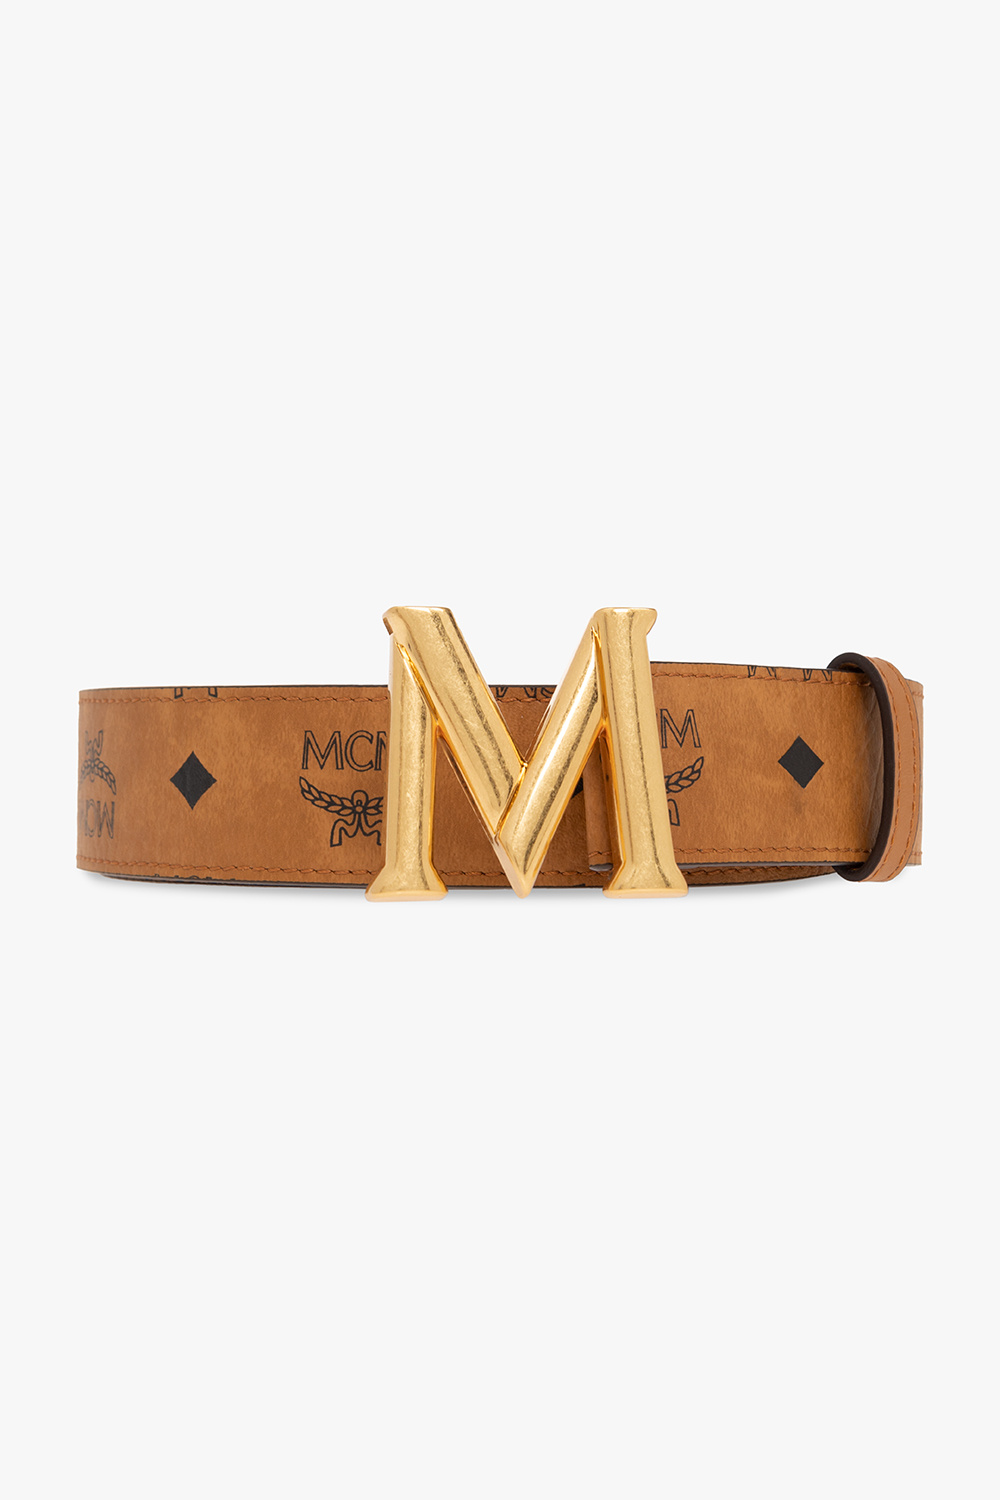 Mcm Men's Claus M Belt 1.5 in Visetos - Brown - Belts